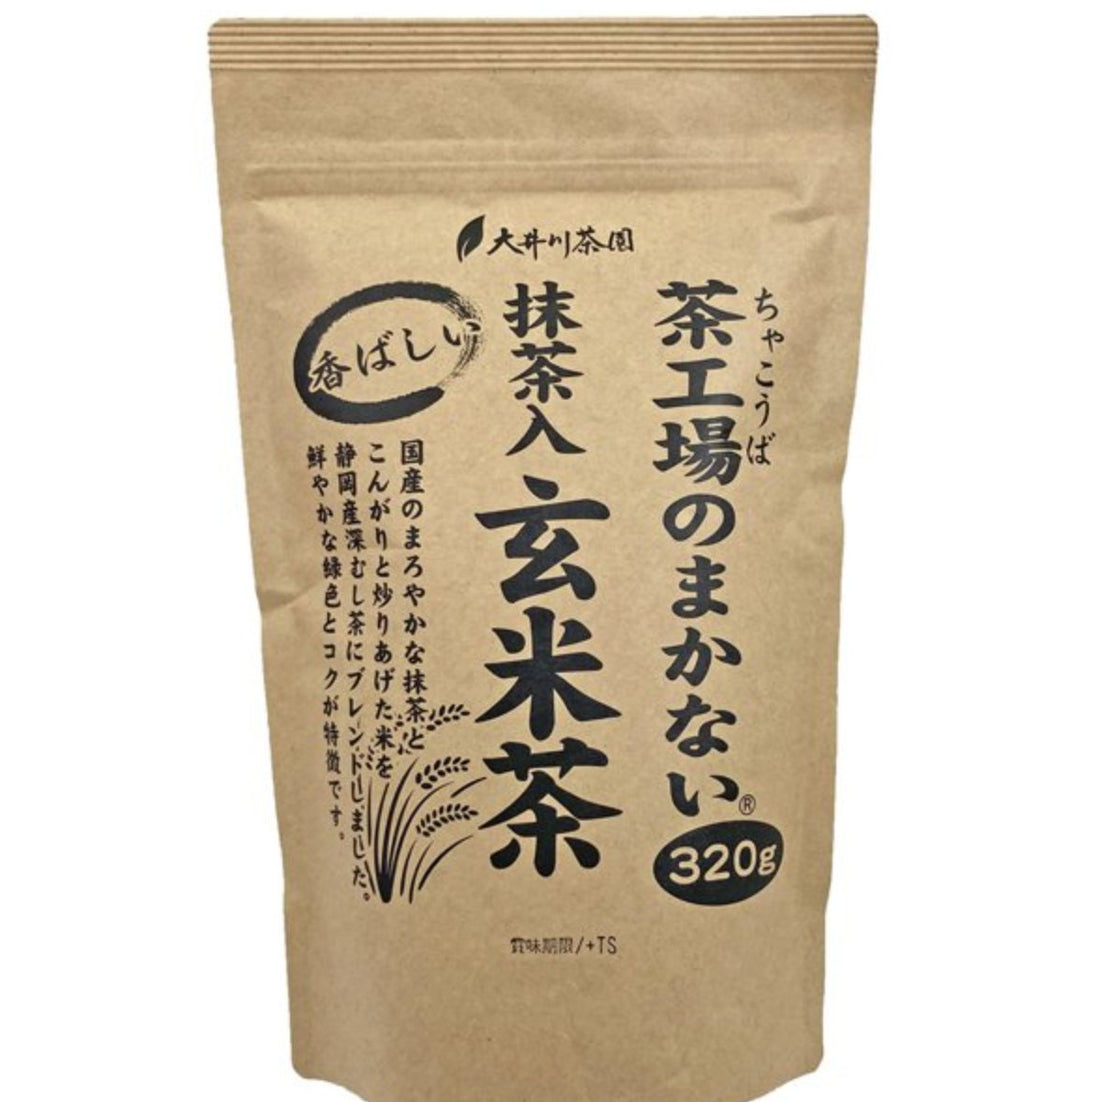 Oigawa Tea Garden Genmaicha with aromatic matcha from Tea Factory 320g - NihonMura